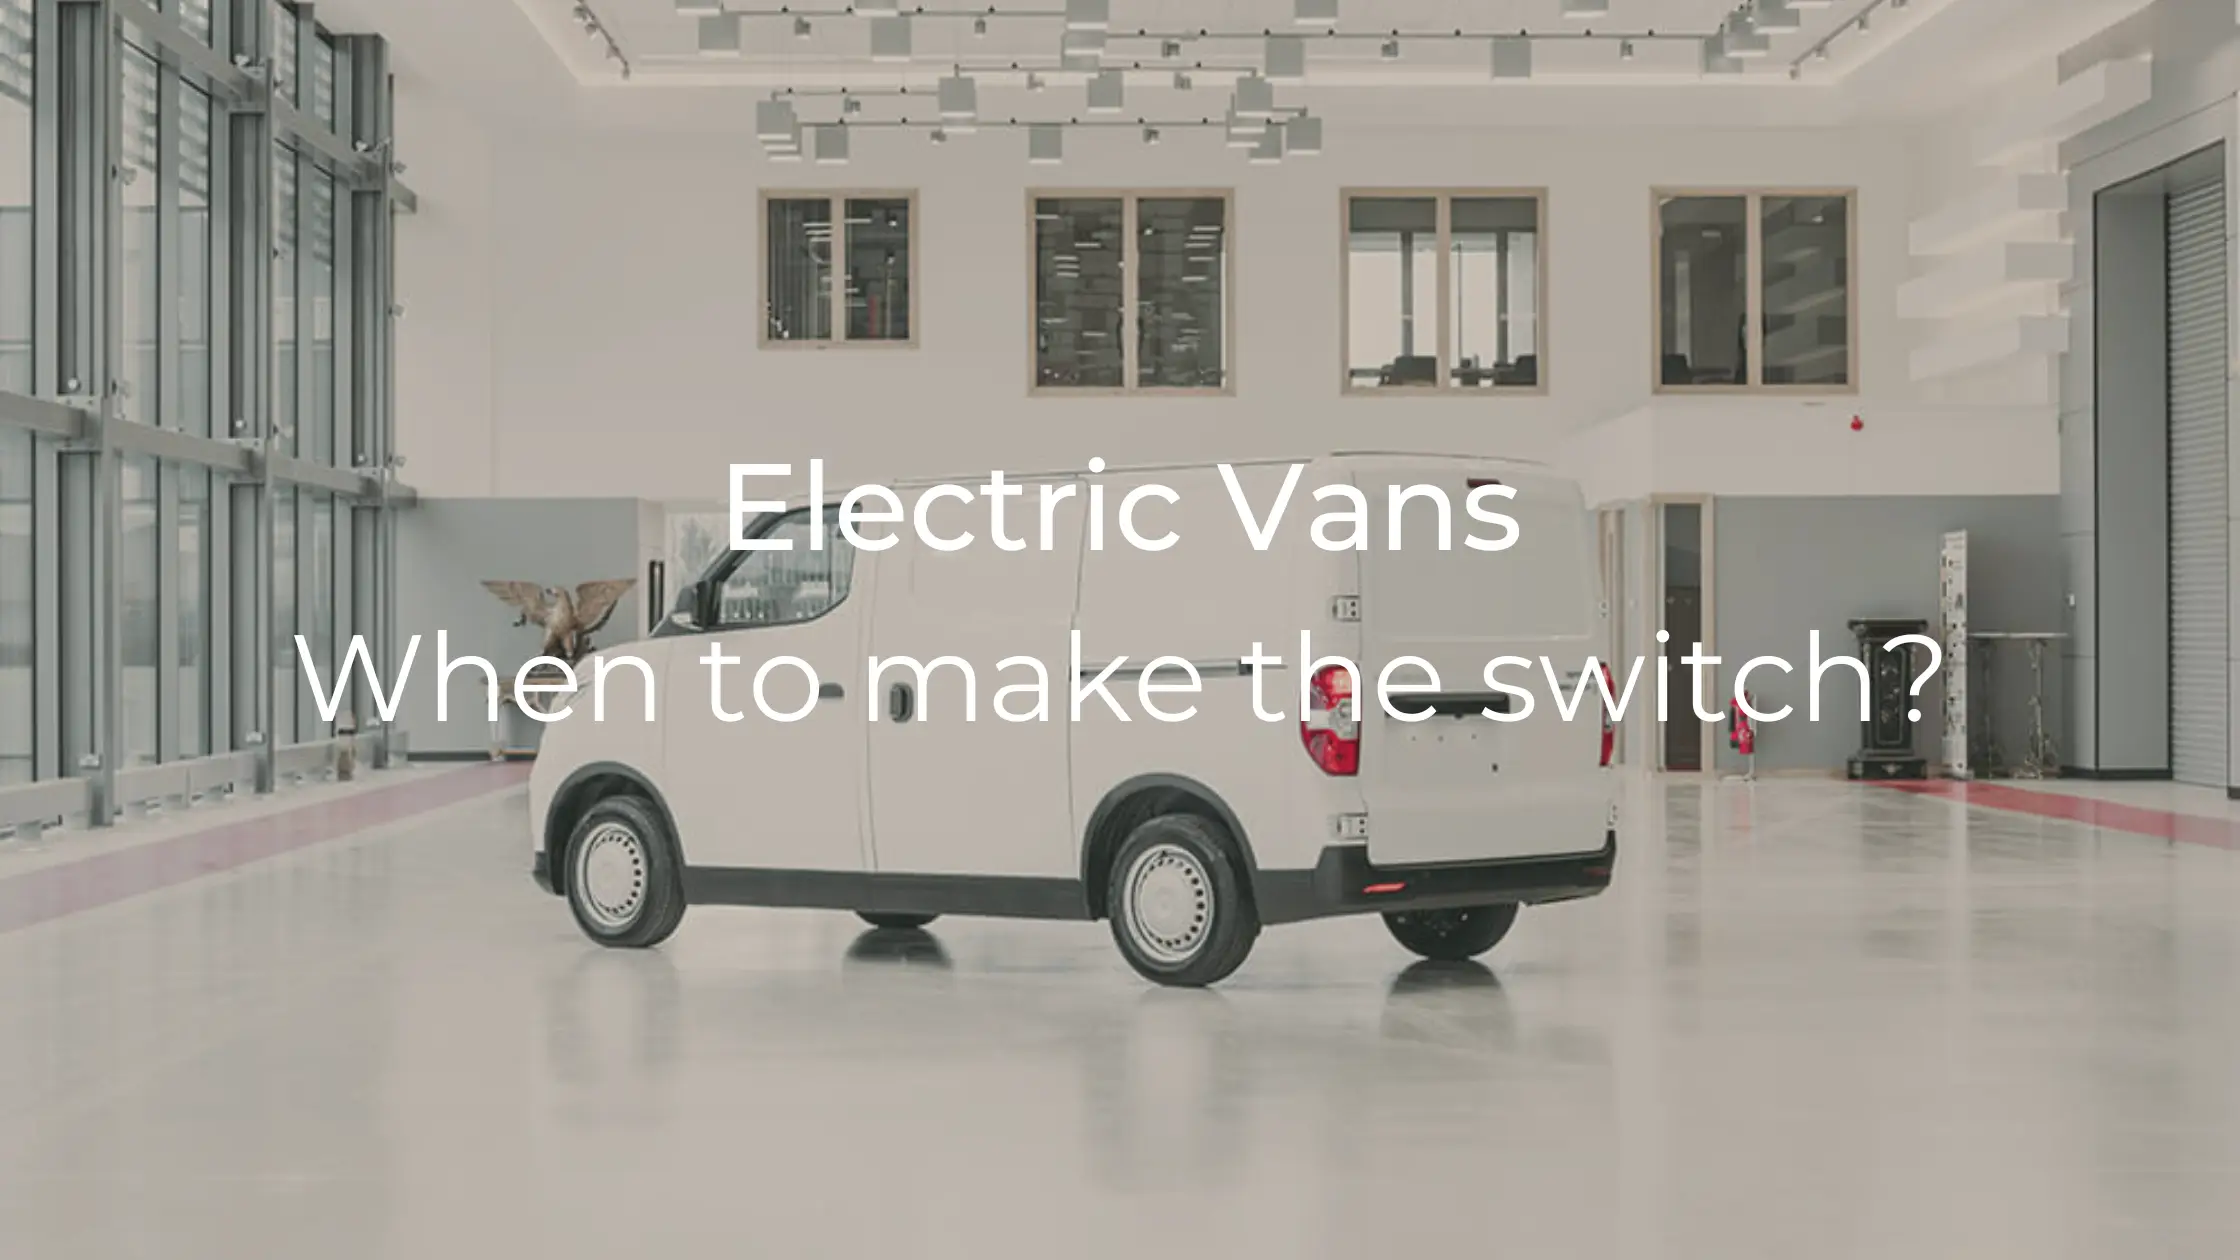 Electric Van Revolution - When to consider?